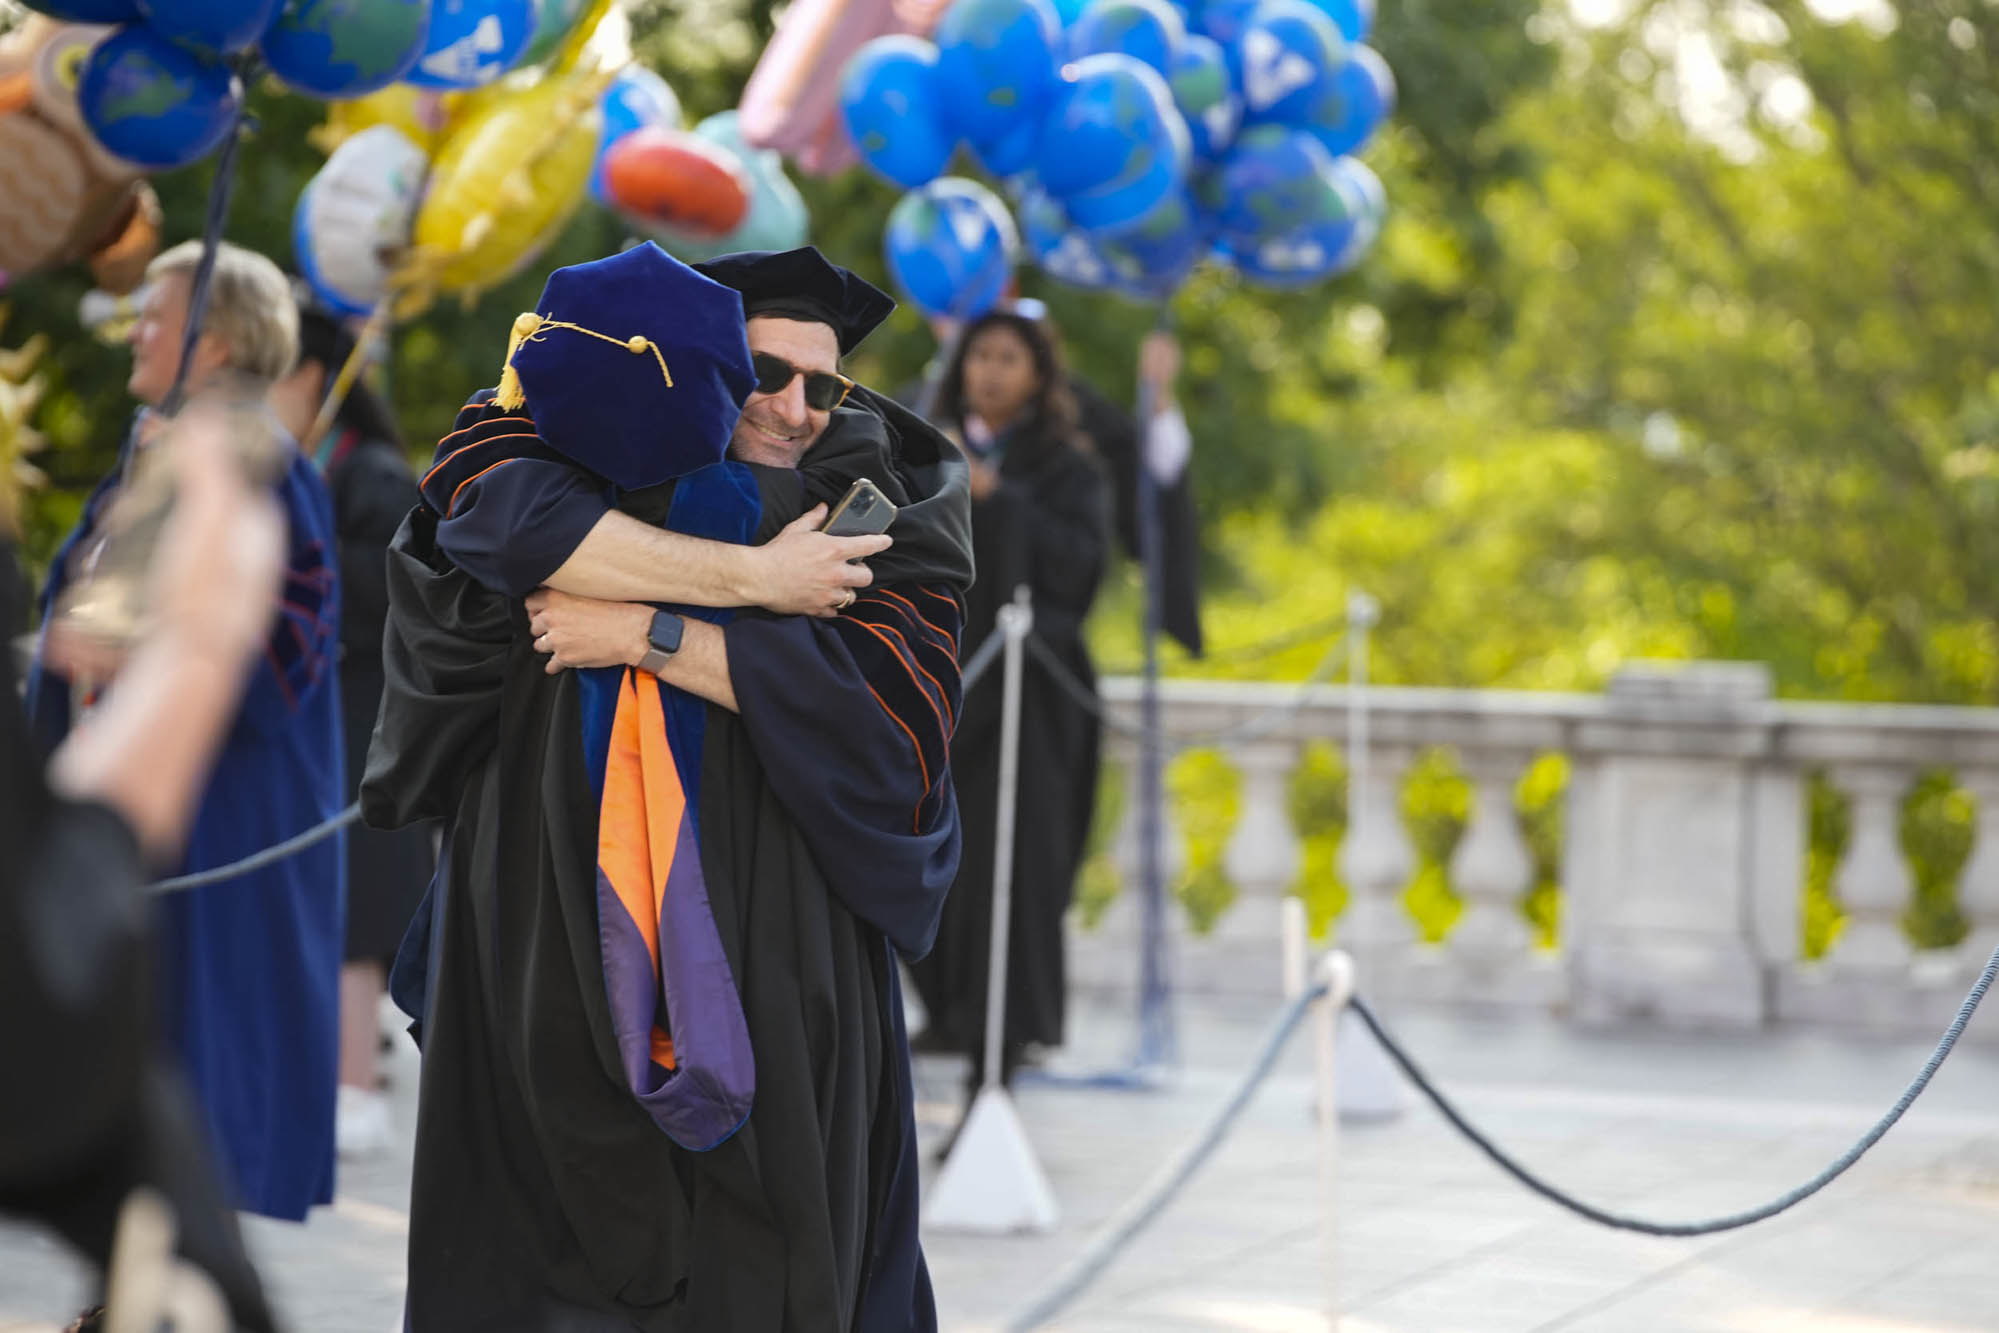 Two graduates celebrating with a hug